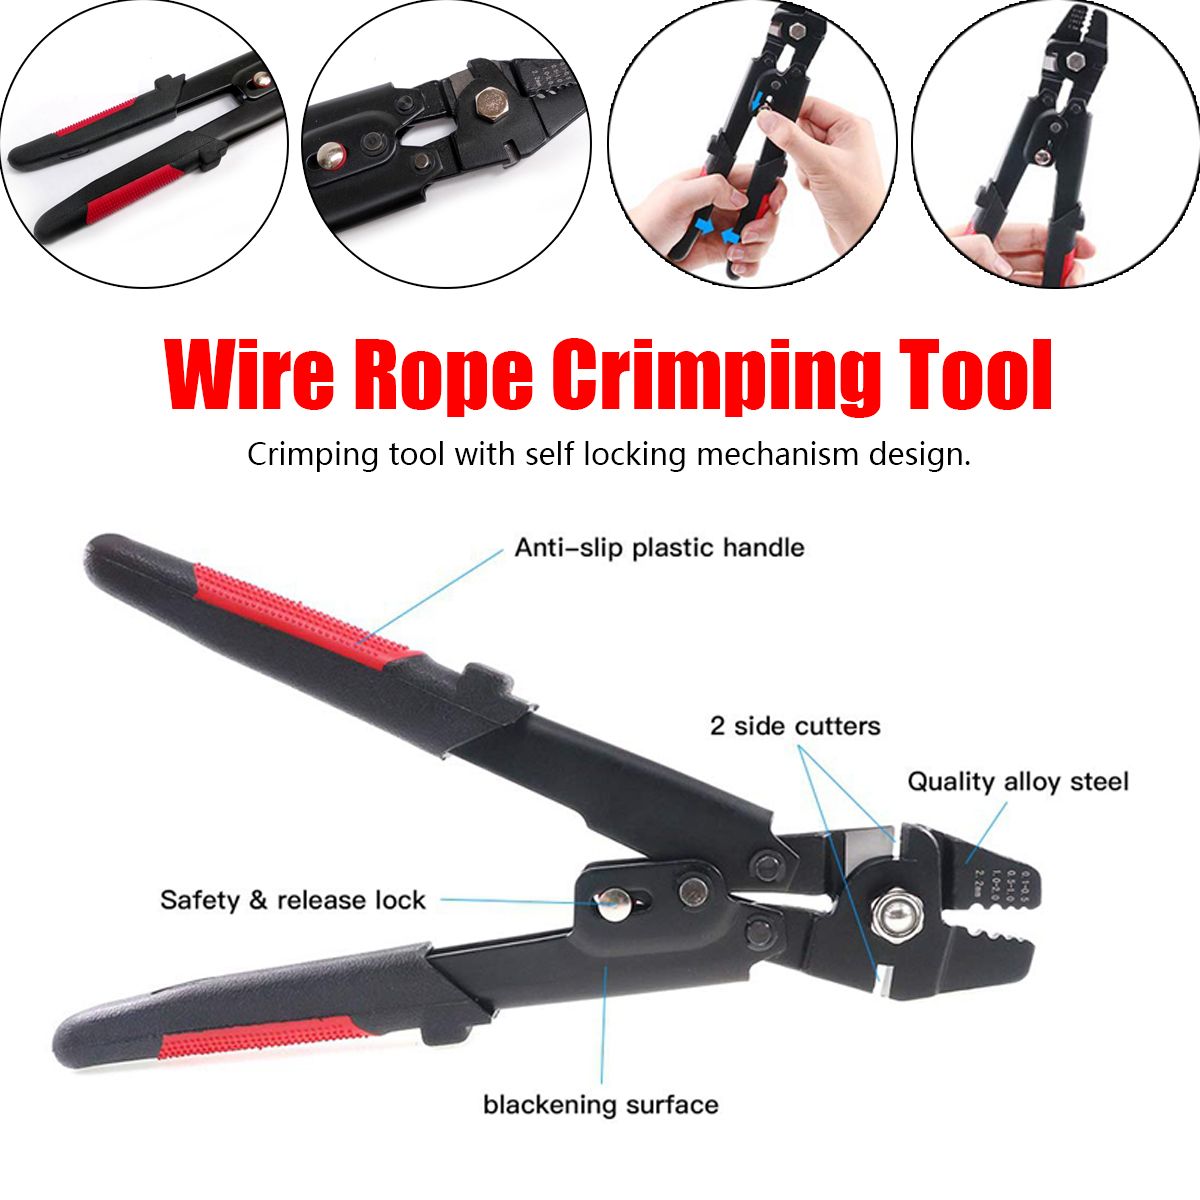 Stainless-Steel-Fishing-Crimp-Pliers-Steel-Rope-Multi-functional-Wire-Rope-Crimping-Tool-1720919